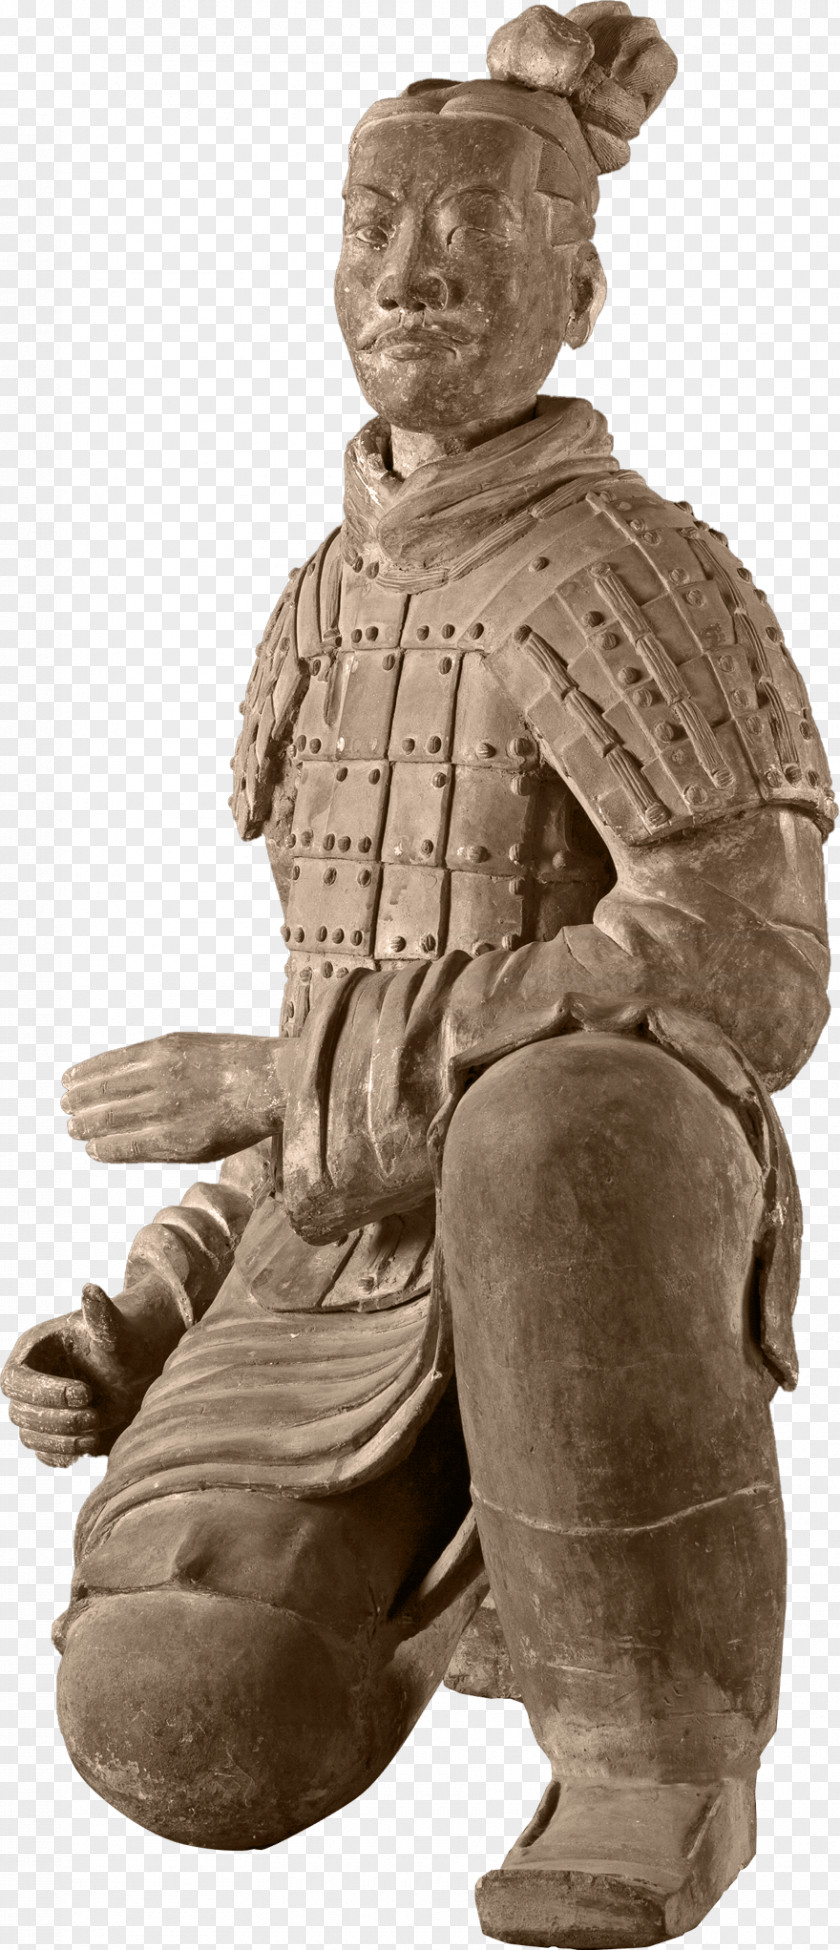 Terra Cotta Warriors Terracotta Army Sculpture Mausoleum Of The First Qin Emperor PNG